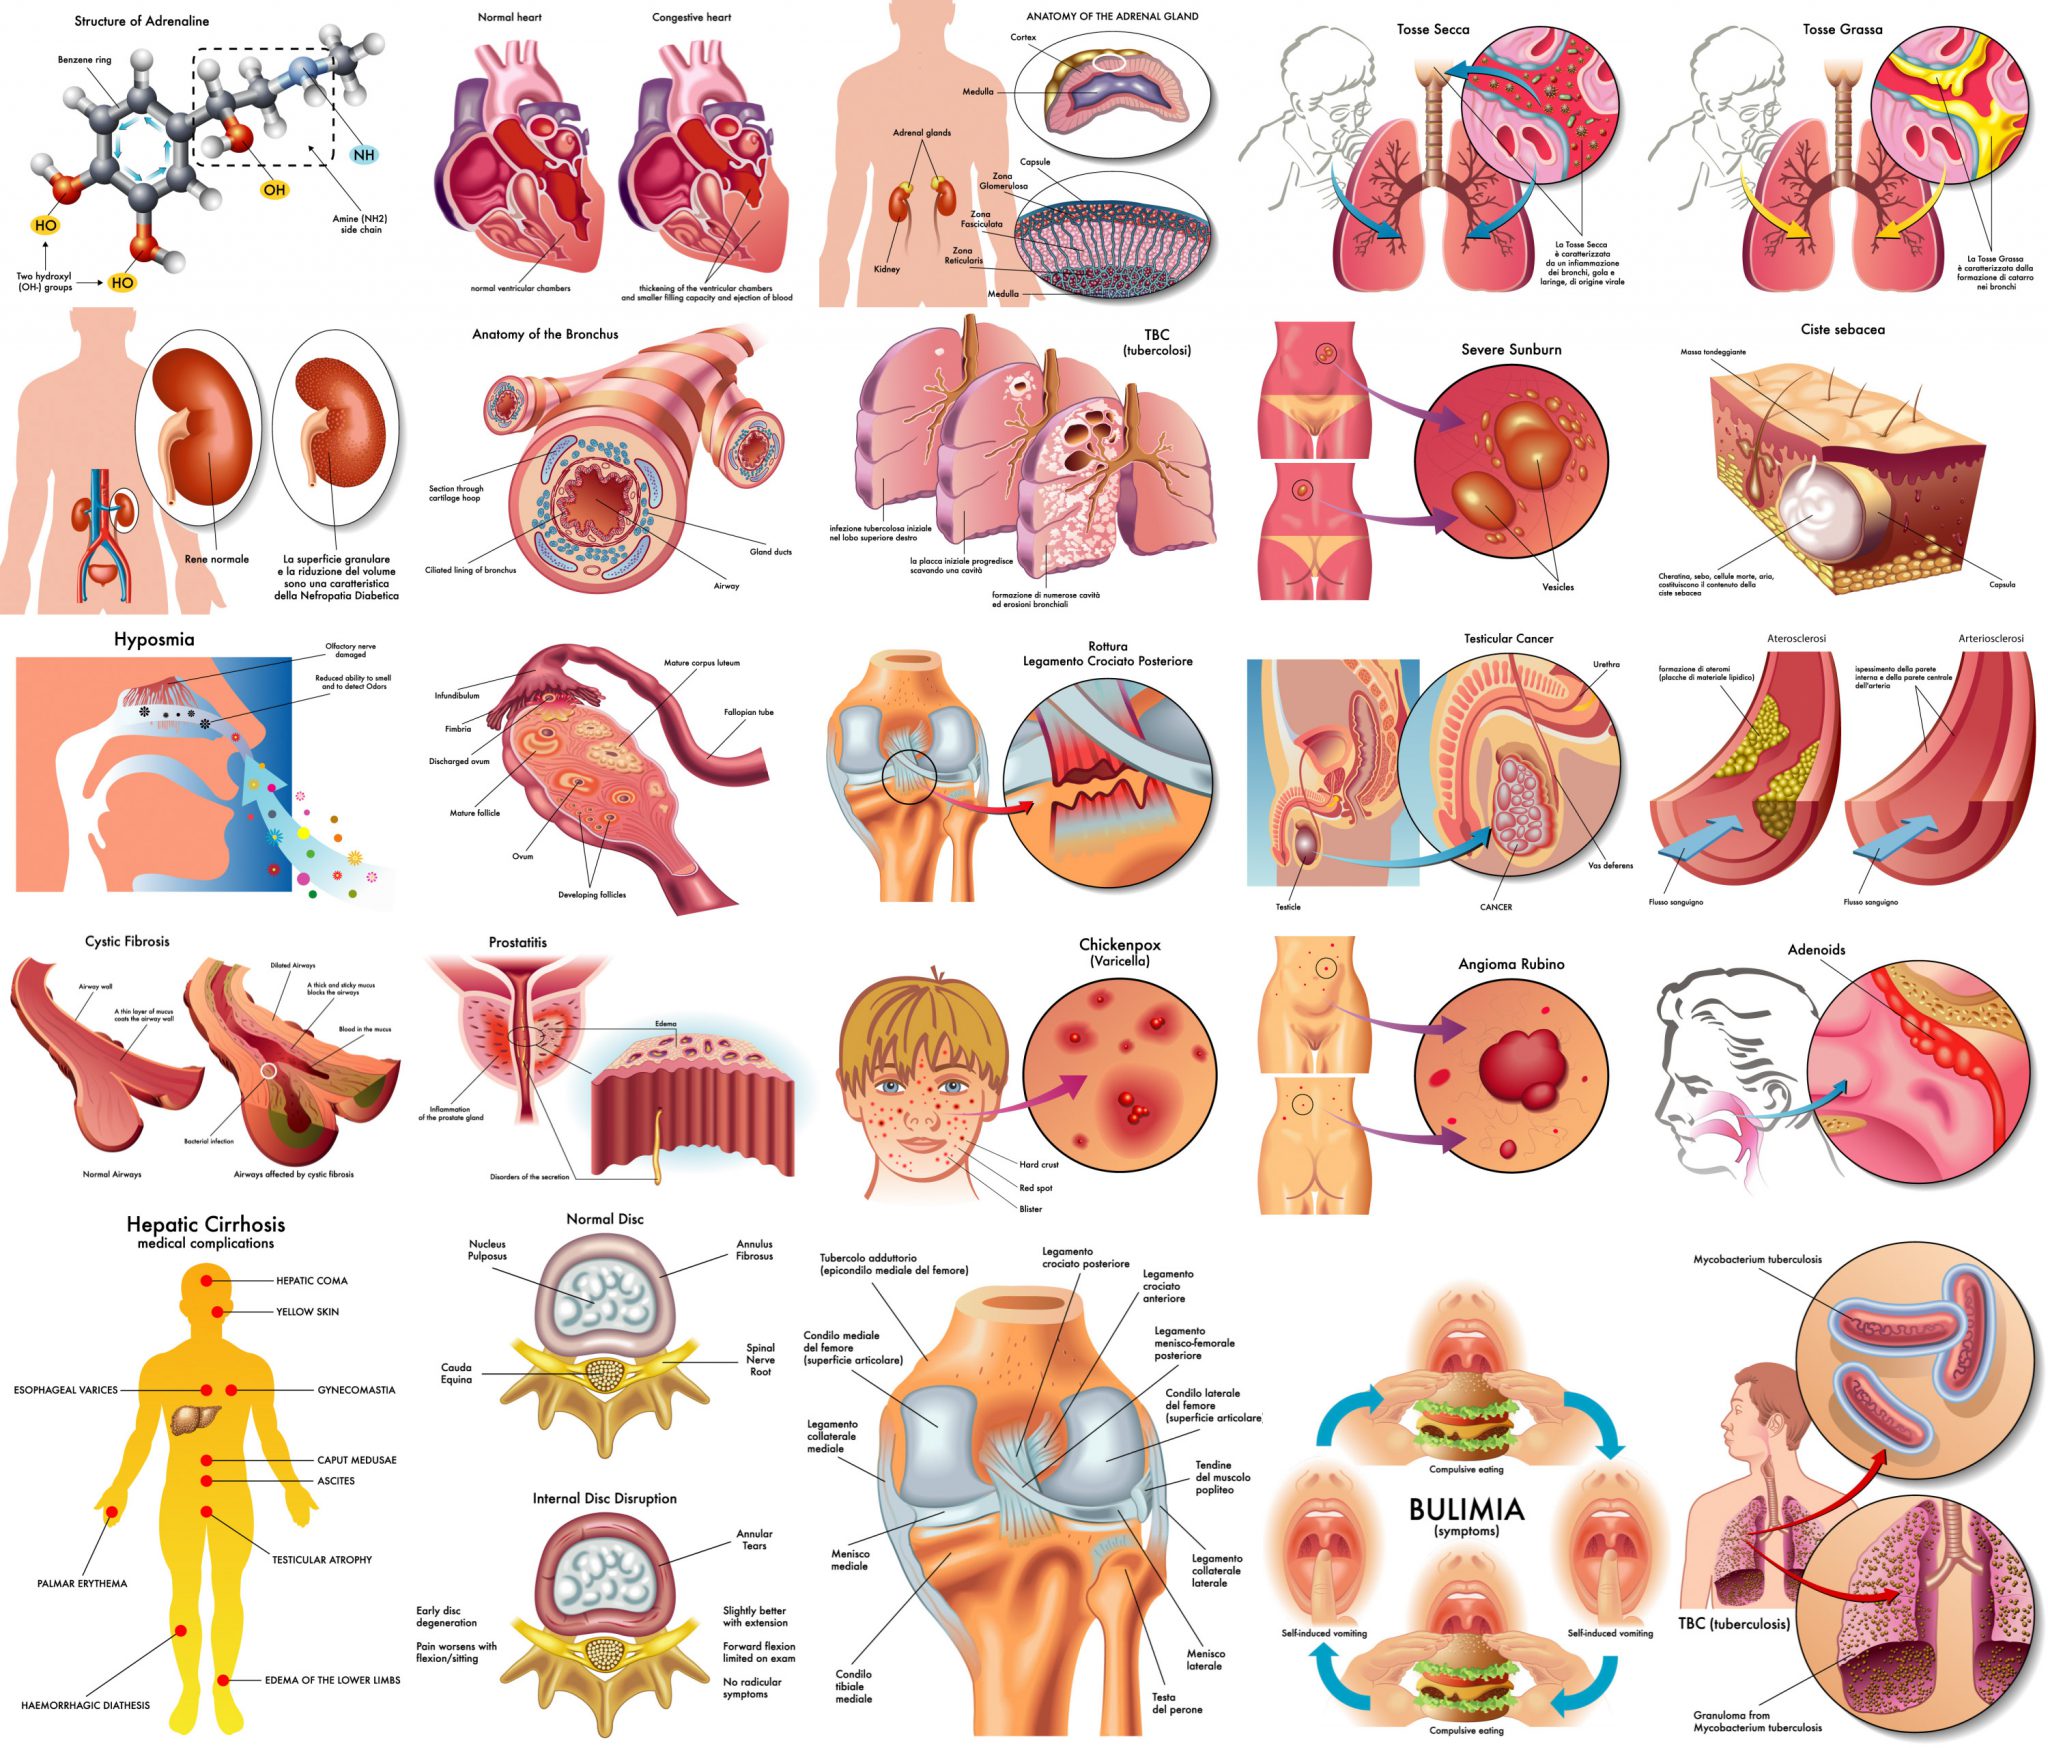 Illustrations of Human anatomy, disease, medical topics vector